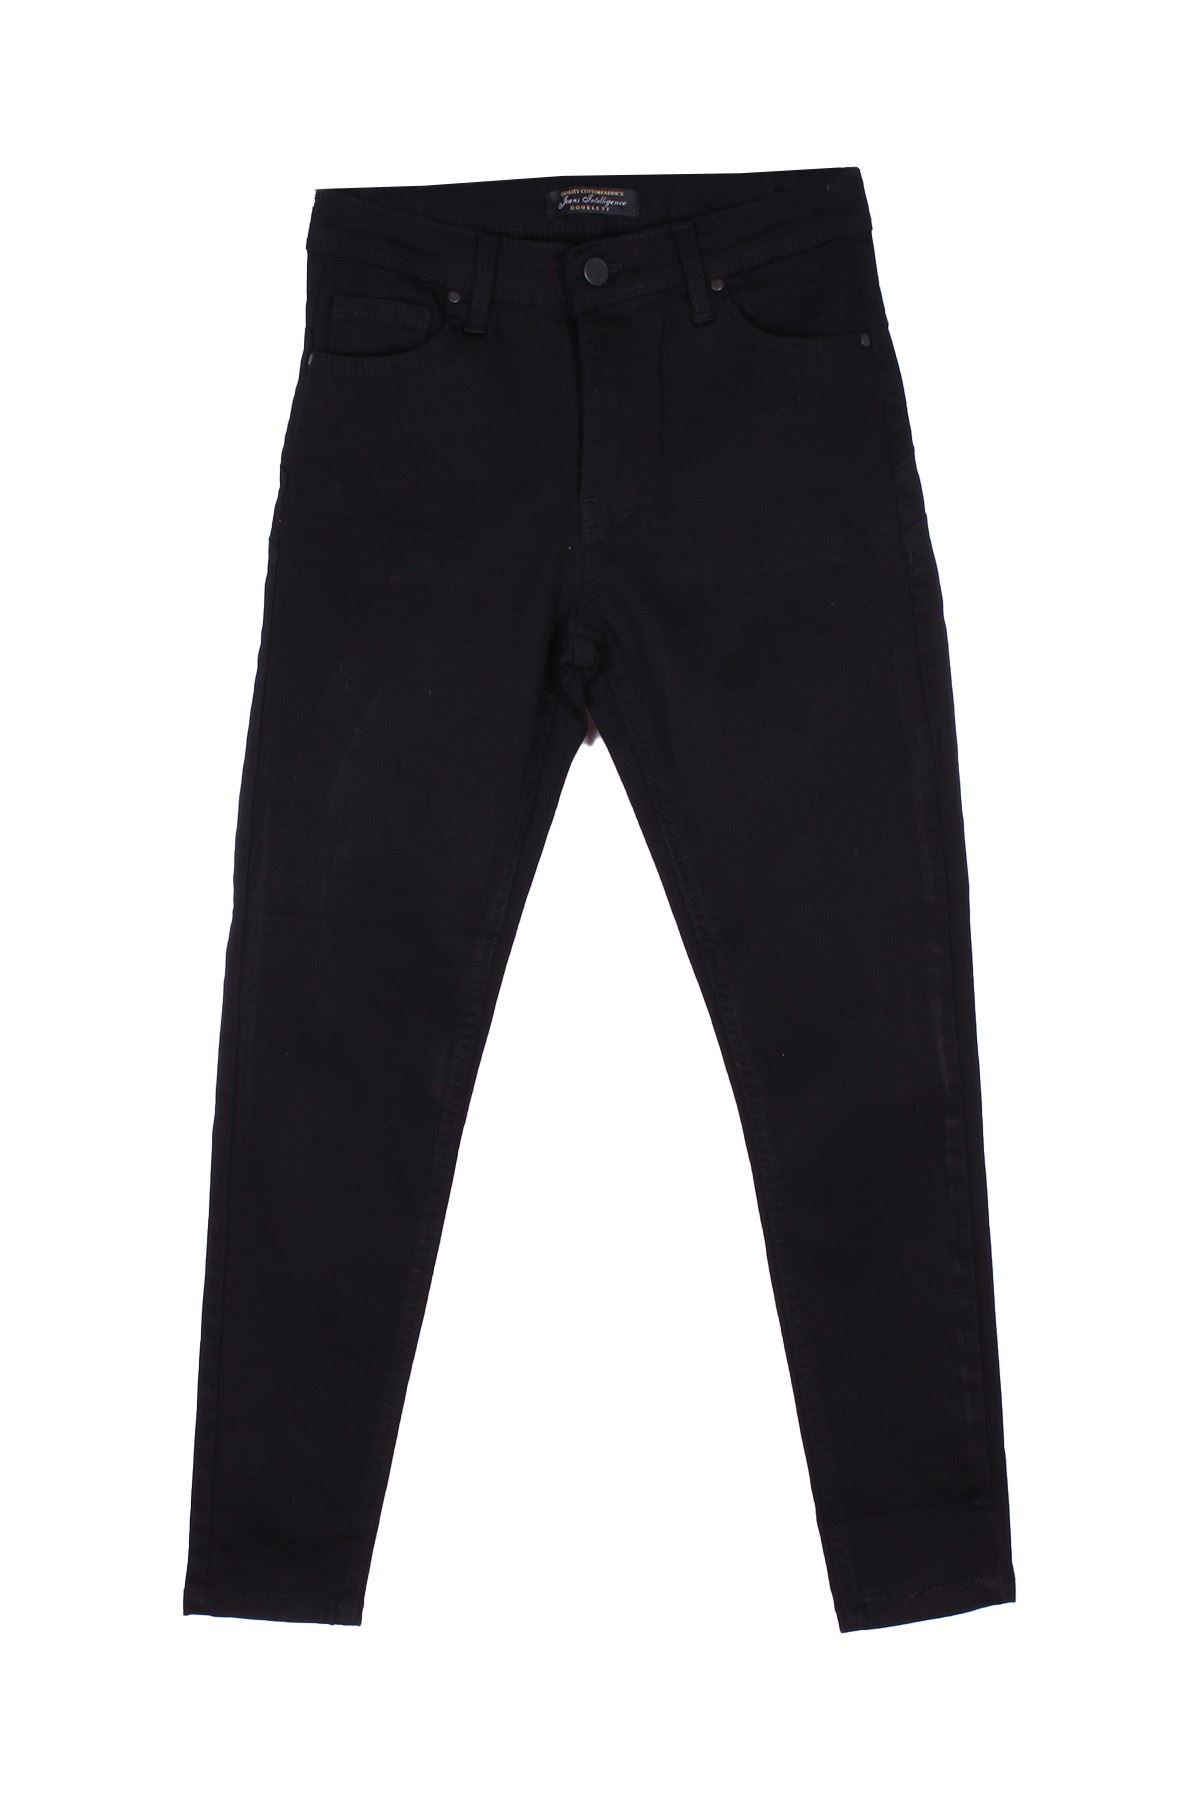 Giyinsen Kadın Siyah Jean Pantolon - 23KD52000014